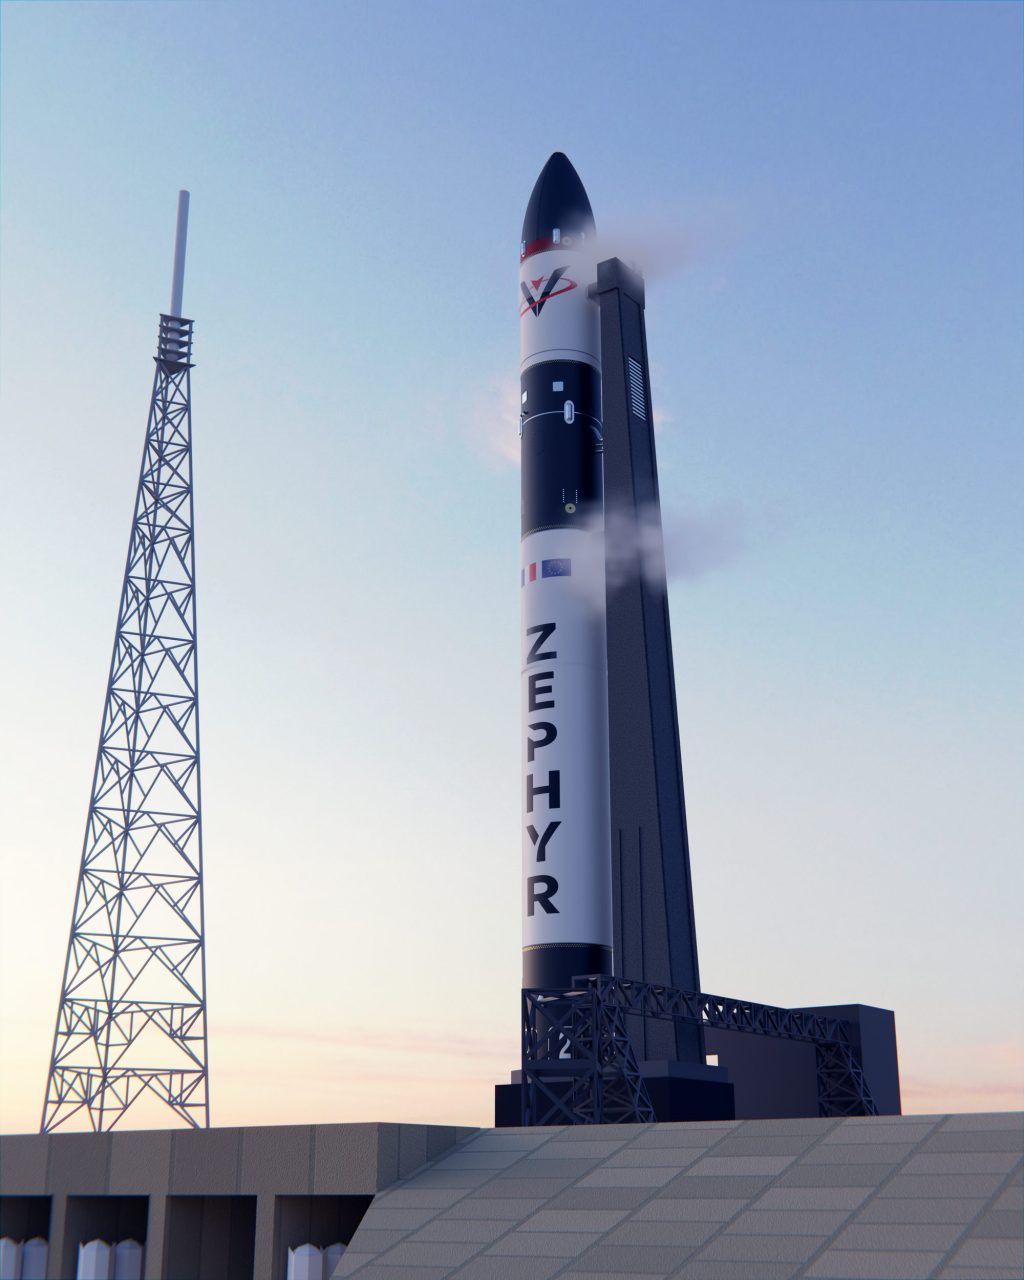 Zephyr Rocket on Launchpad